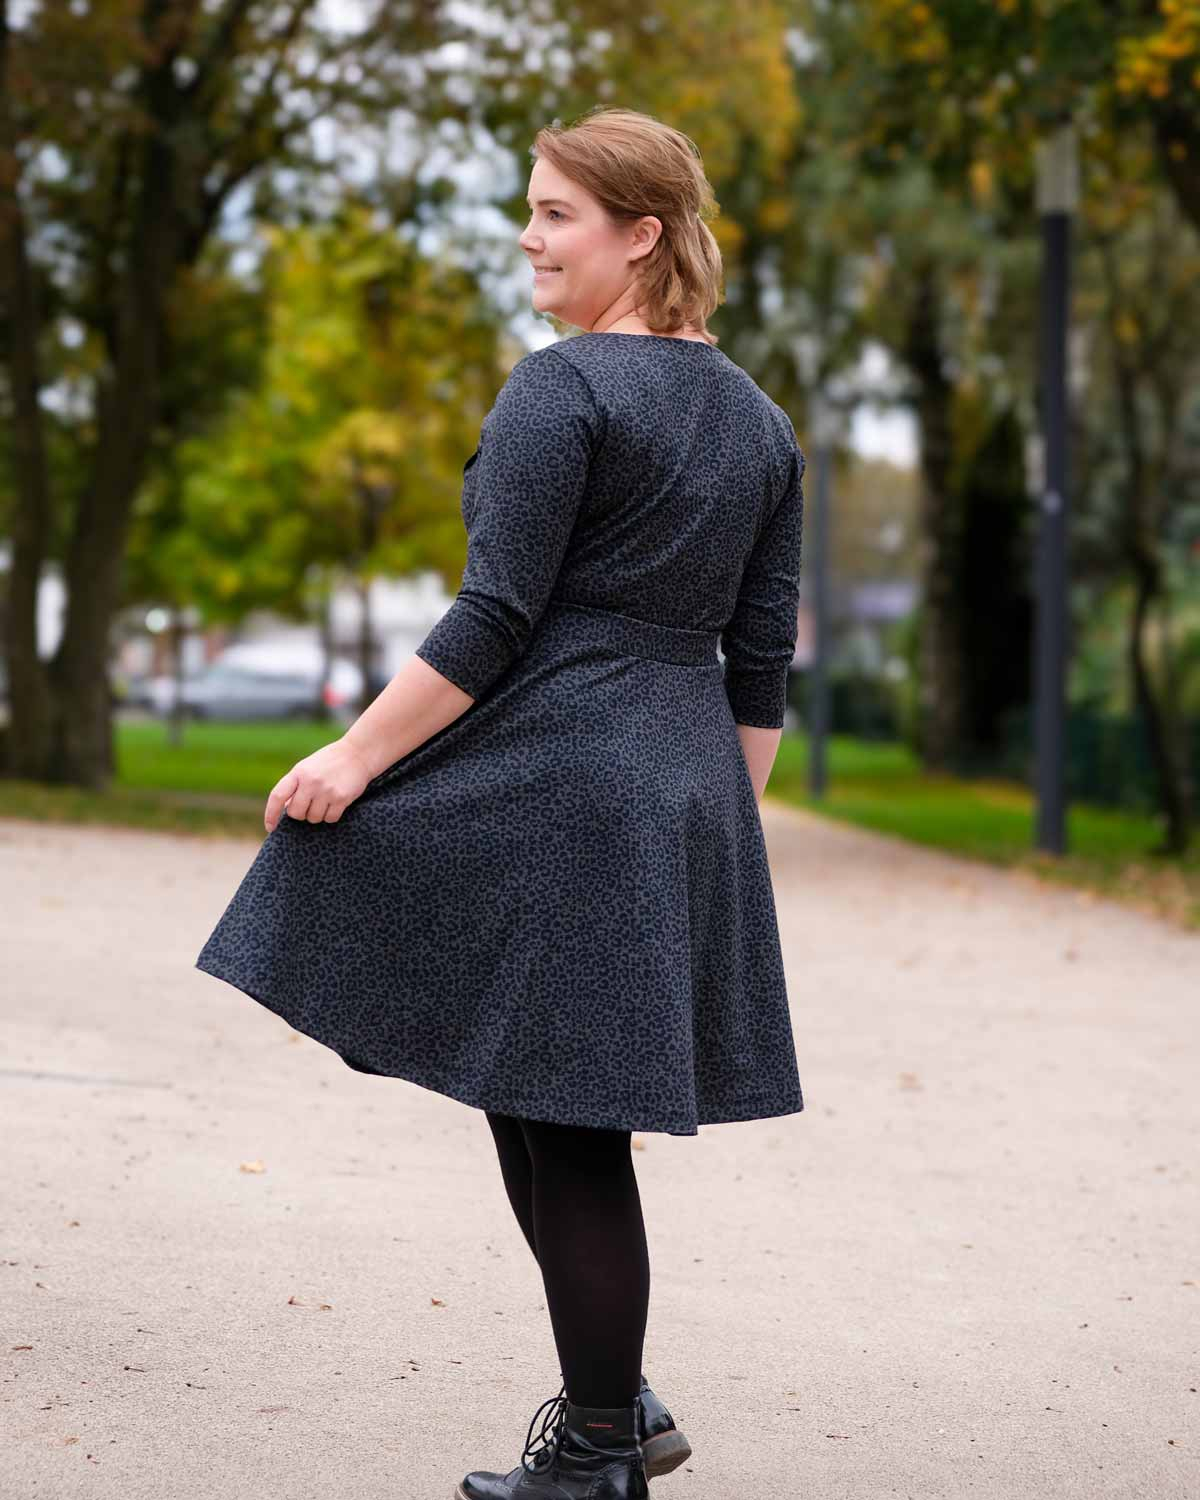 Ebook patron robe tablier femme ALEV Sew Simple, en allemand